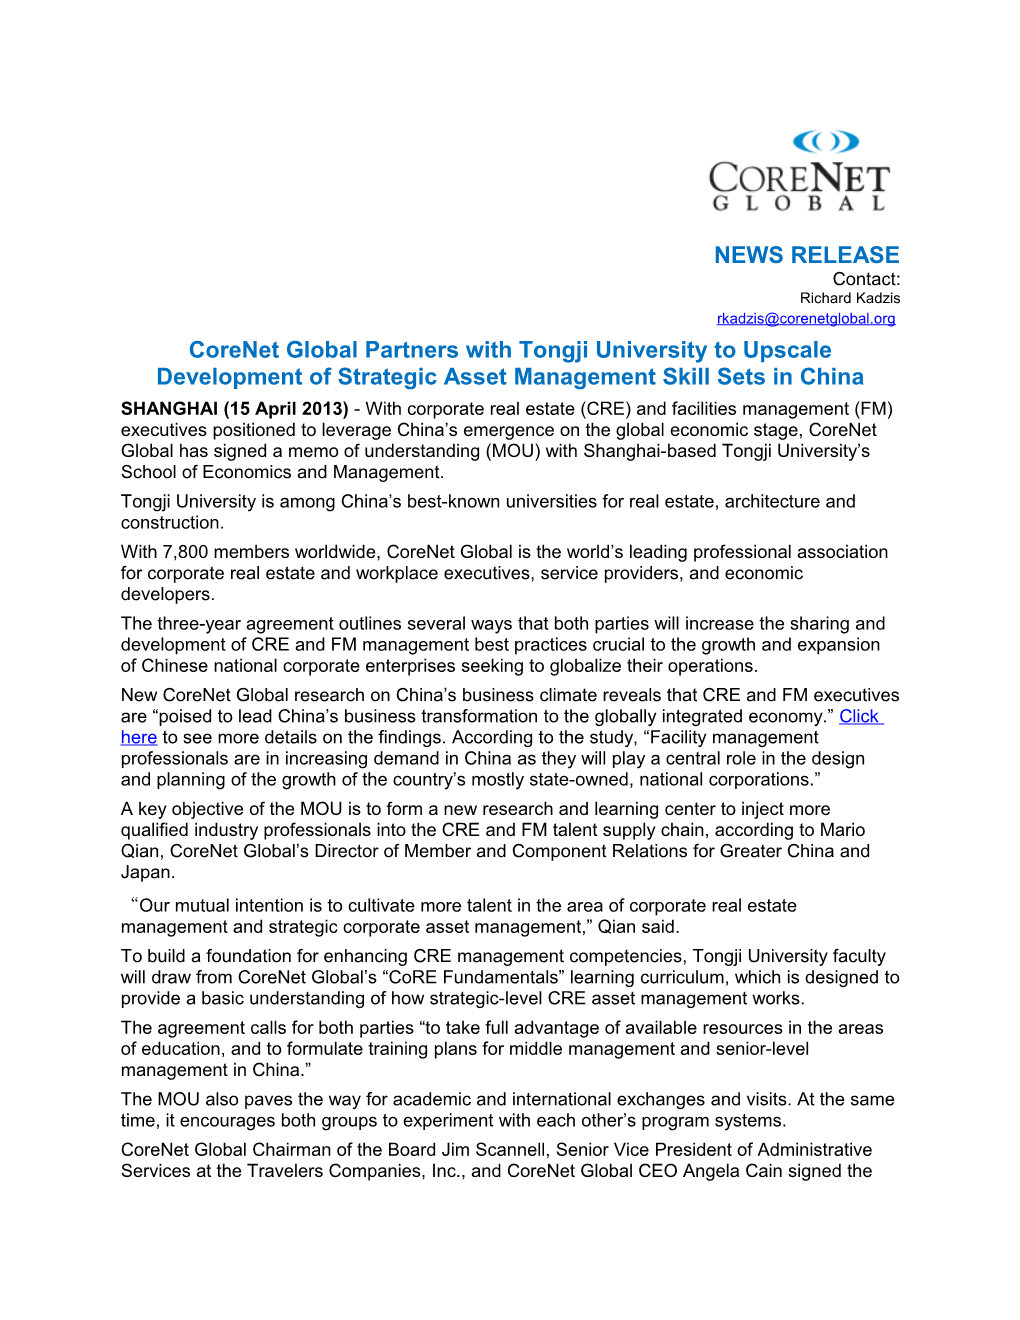 Corenet Global Partners with Tongji University to Upscale Development of Strategic Asset